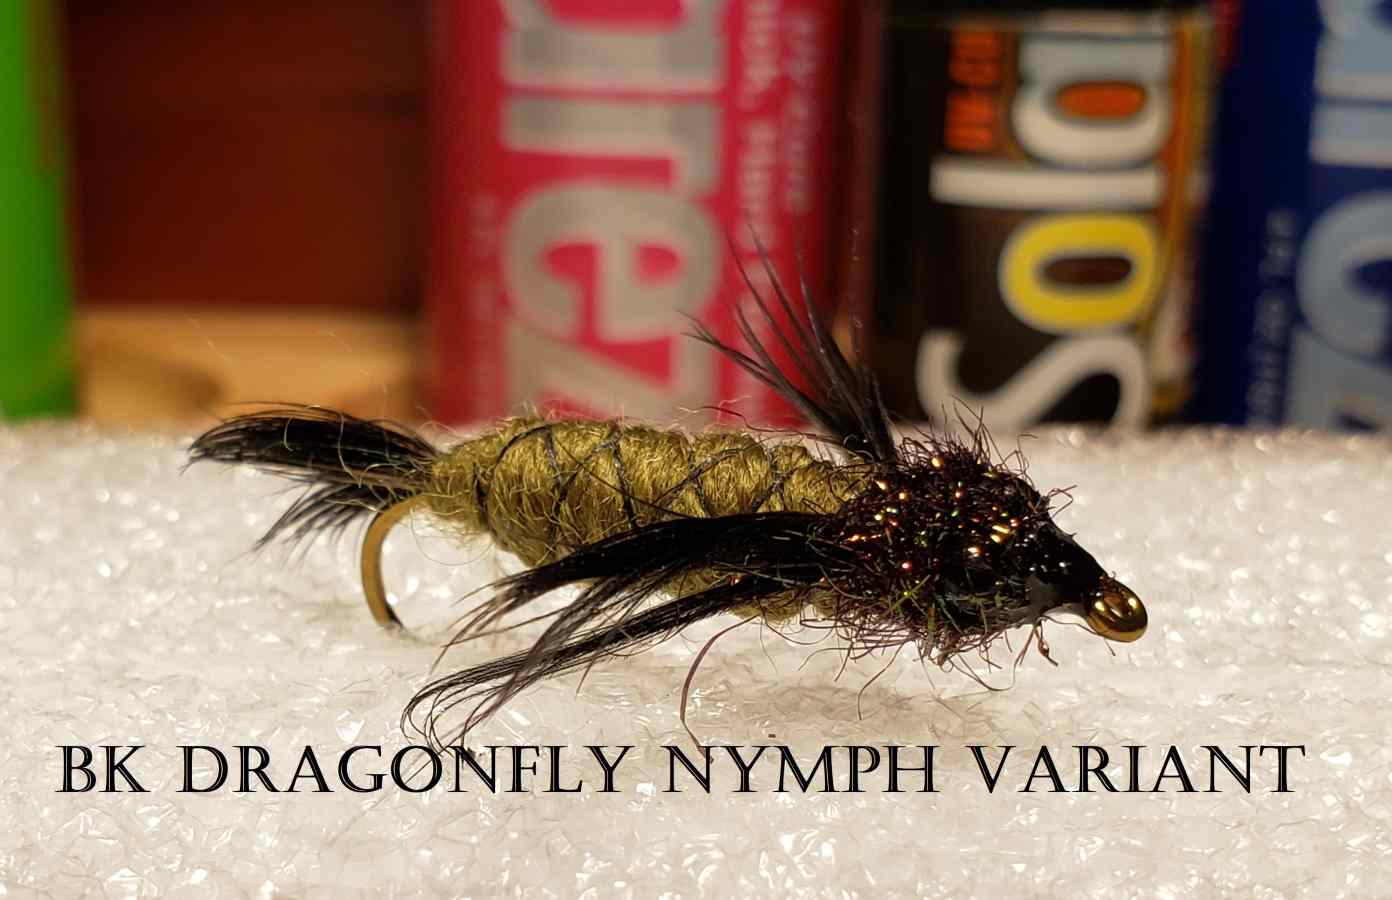 https://fridaynightflies.com/wp-content/uploads/2020/04/Friday-Night-Flies-BK-Dragonfly-Nymph-Variant.jpg